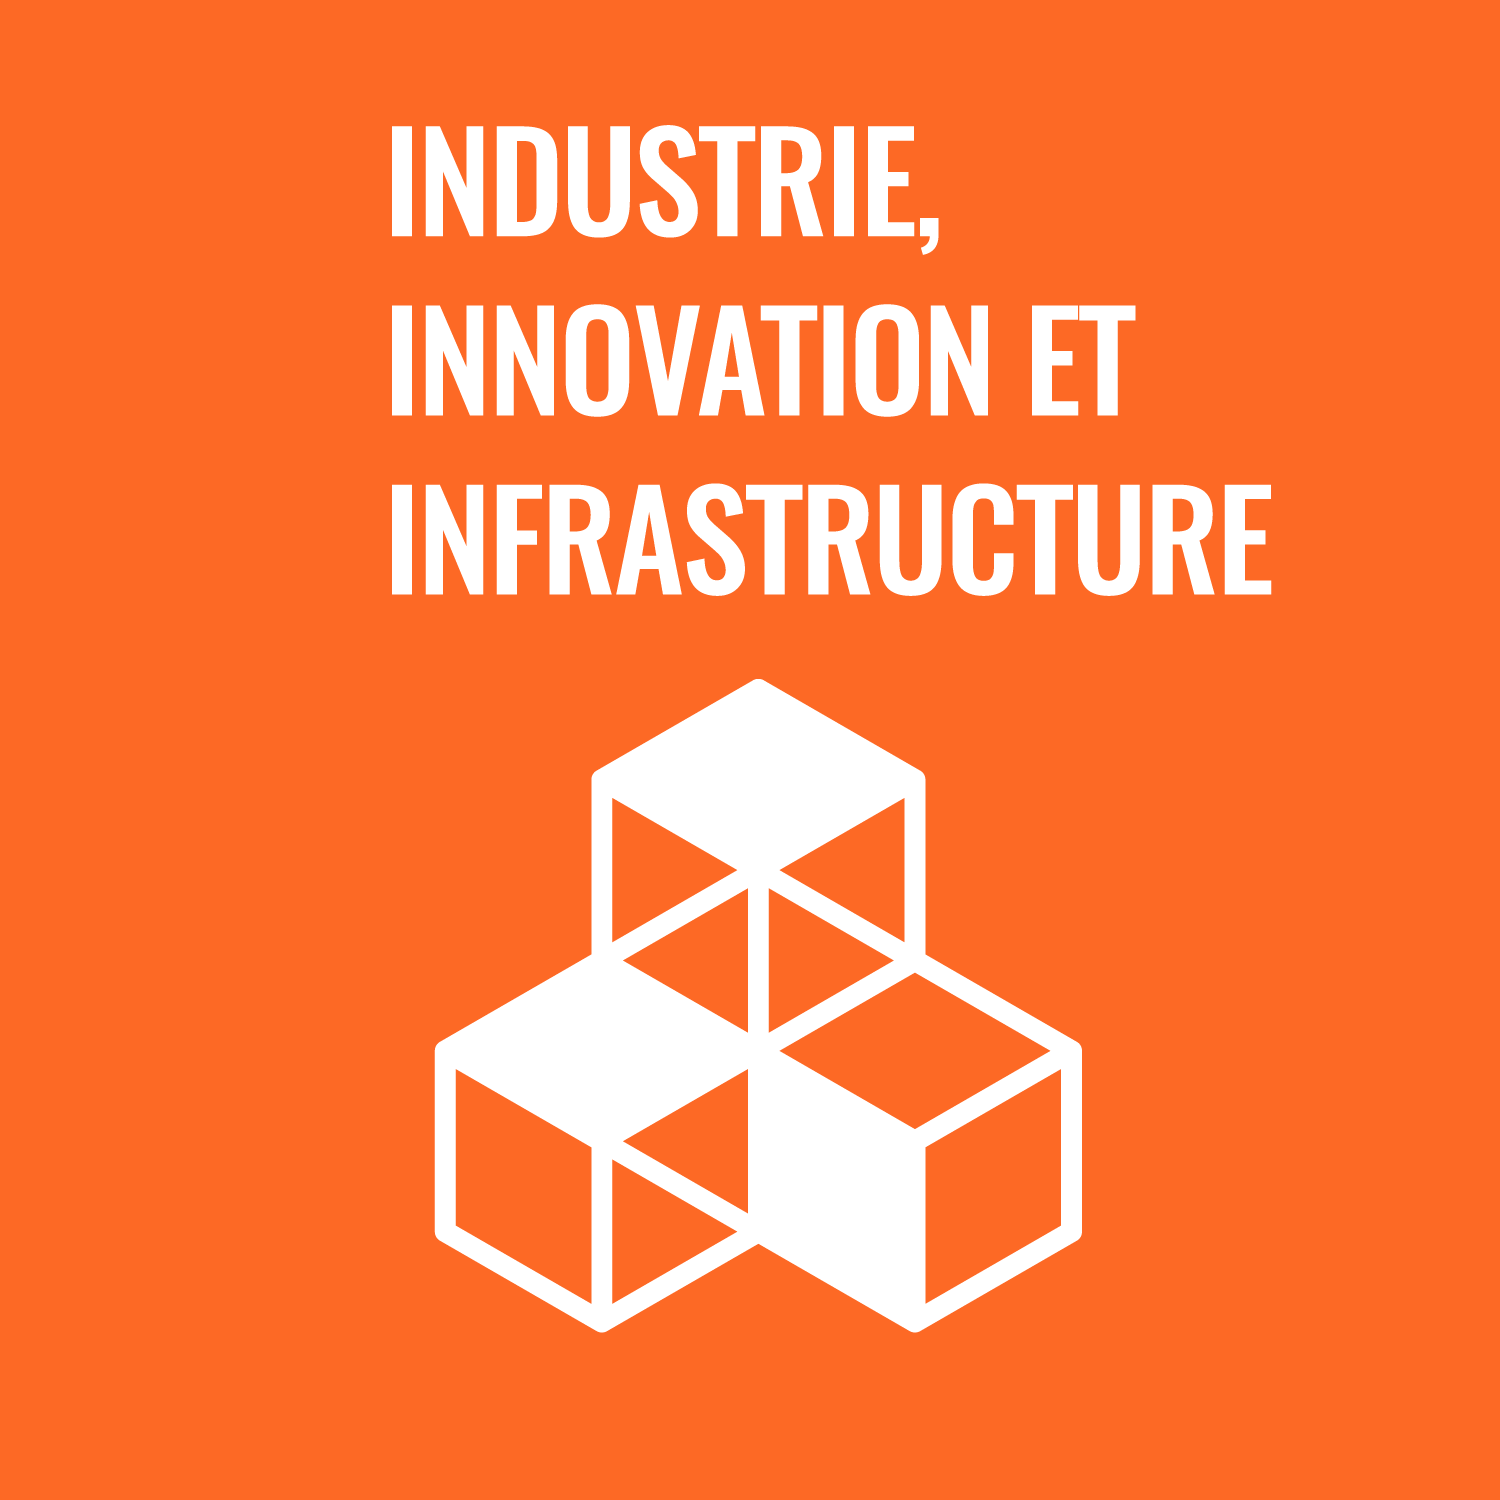 Industrie, innovation et infrastructure